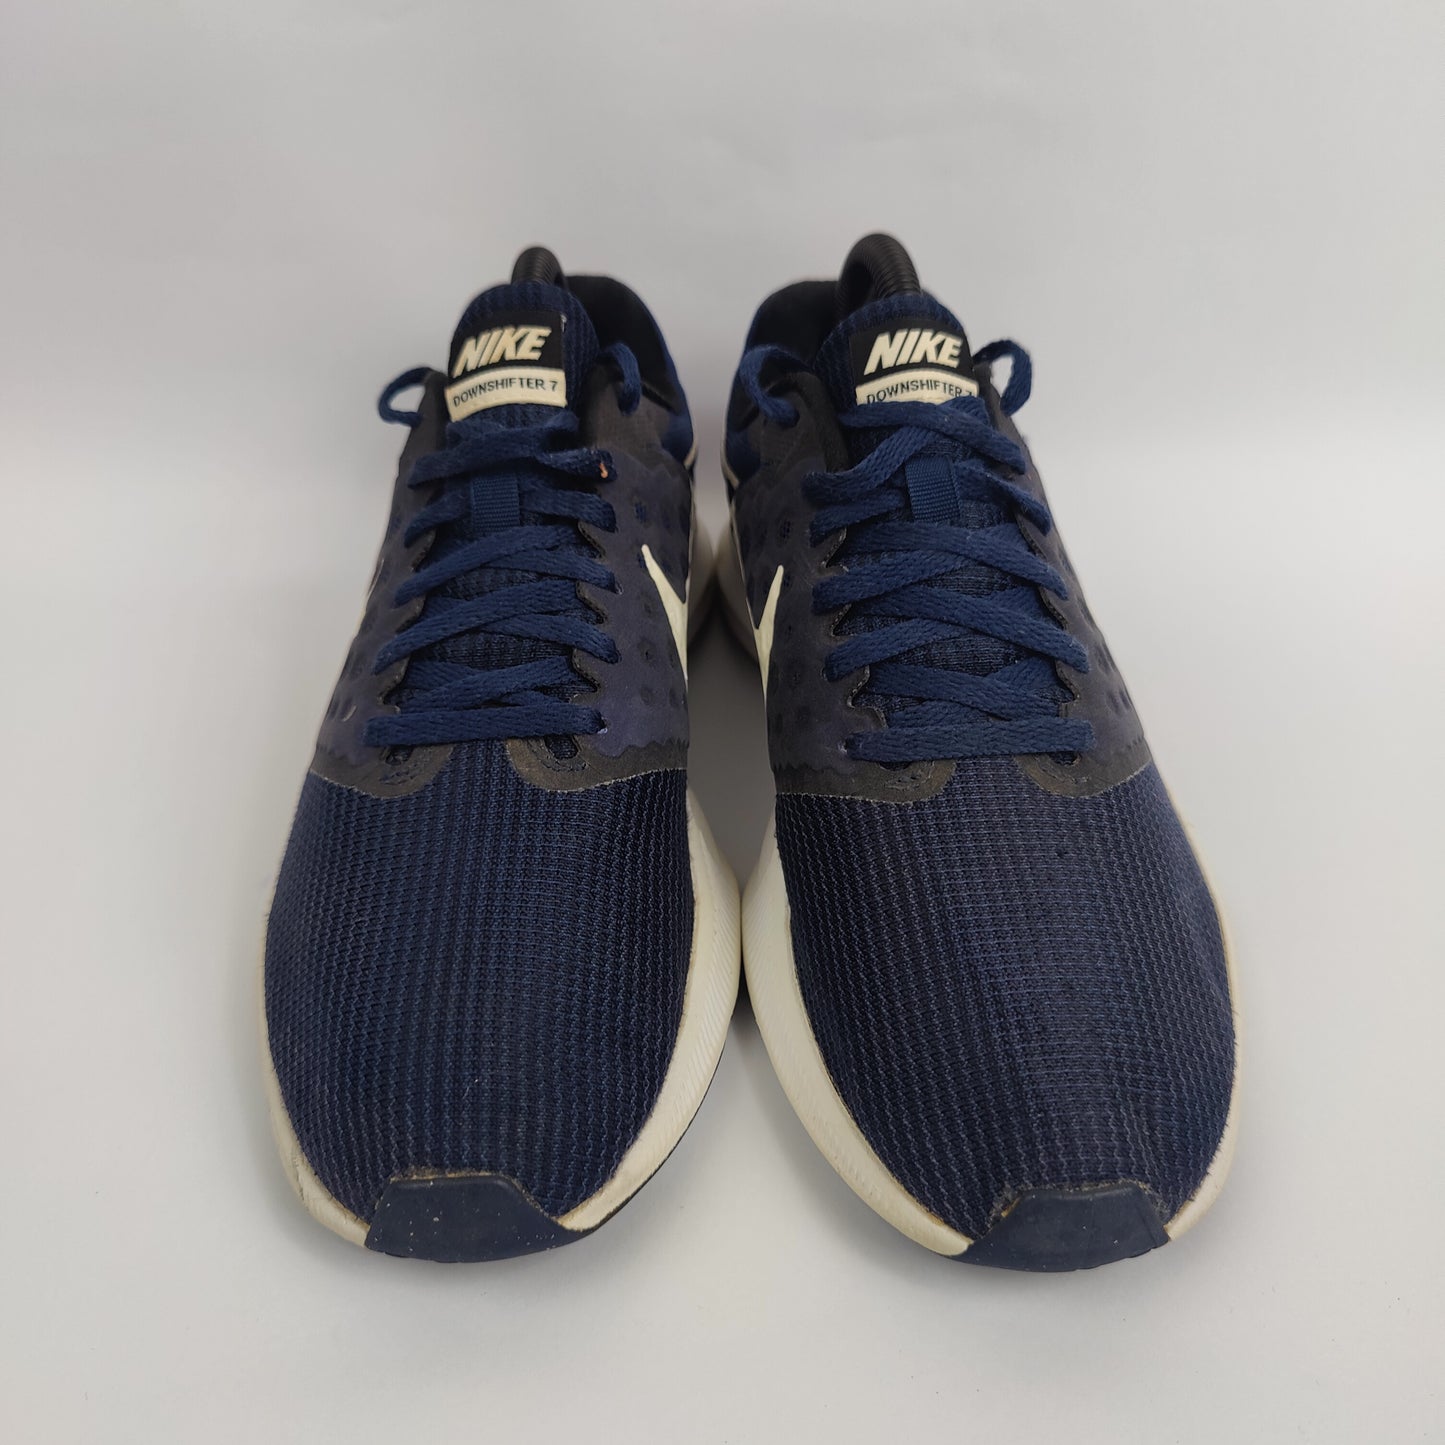 Nike Downshifter 7 - Blue - 4001737